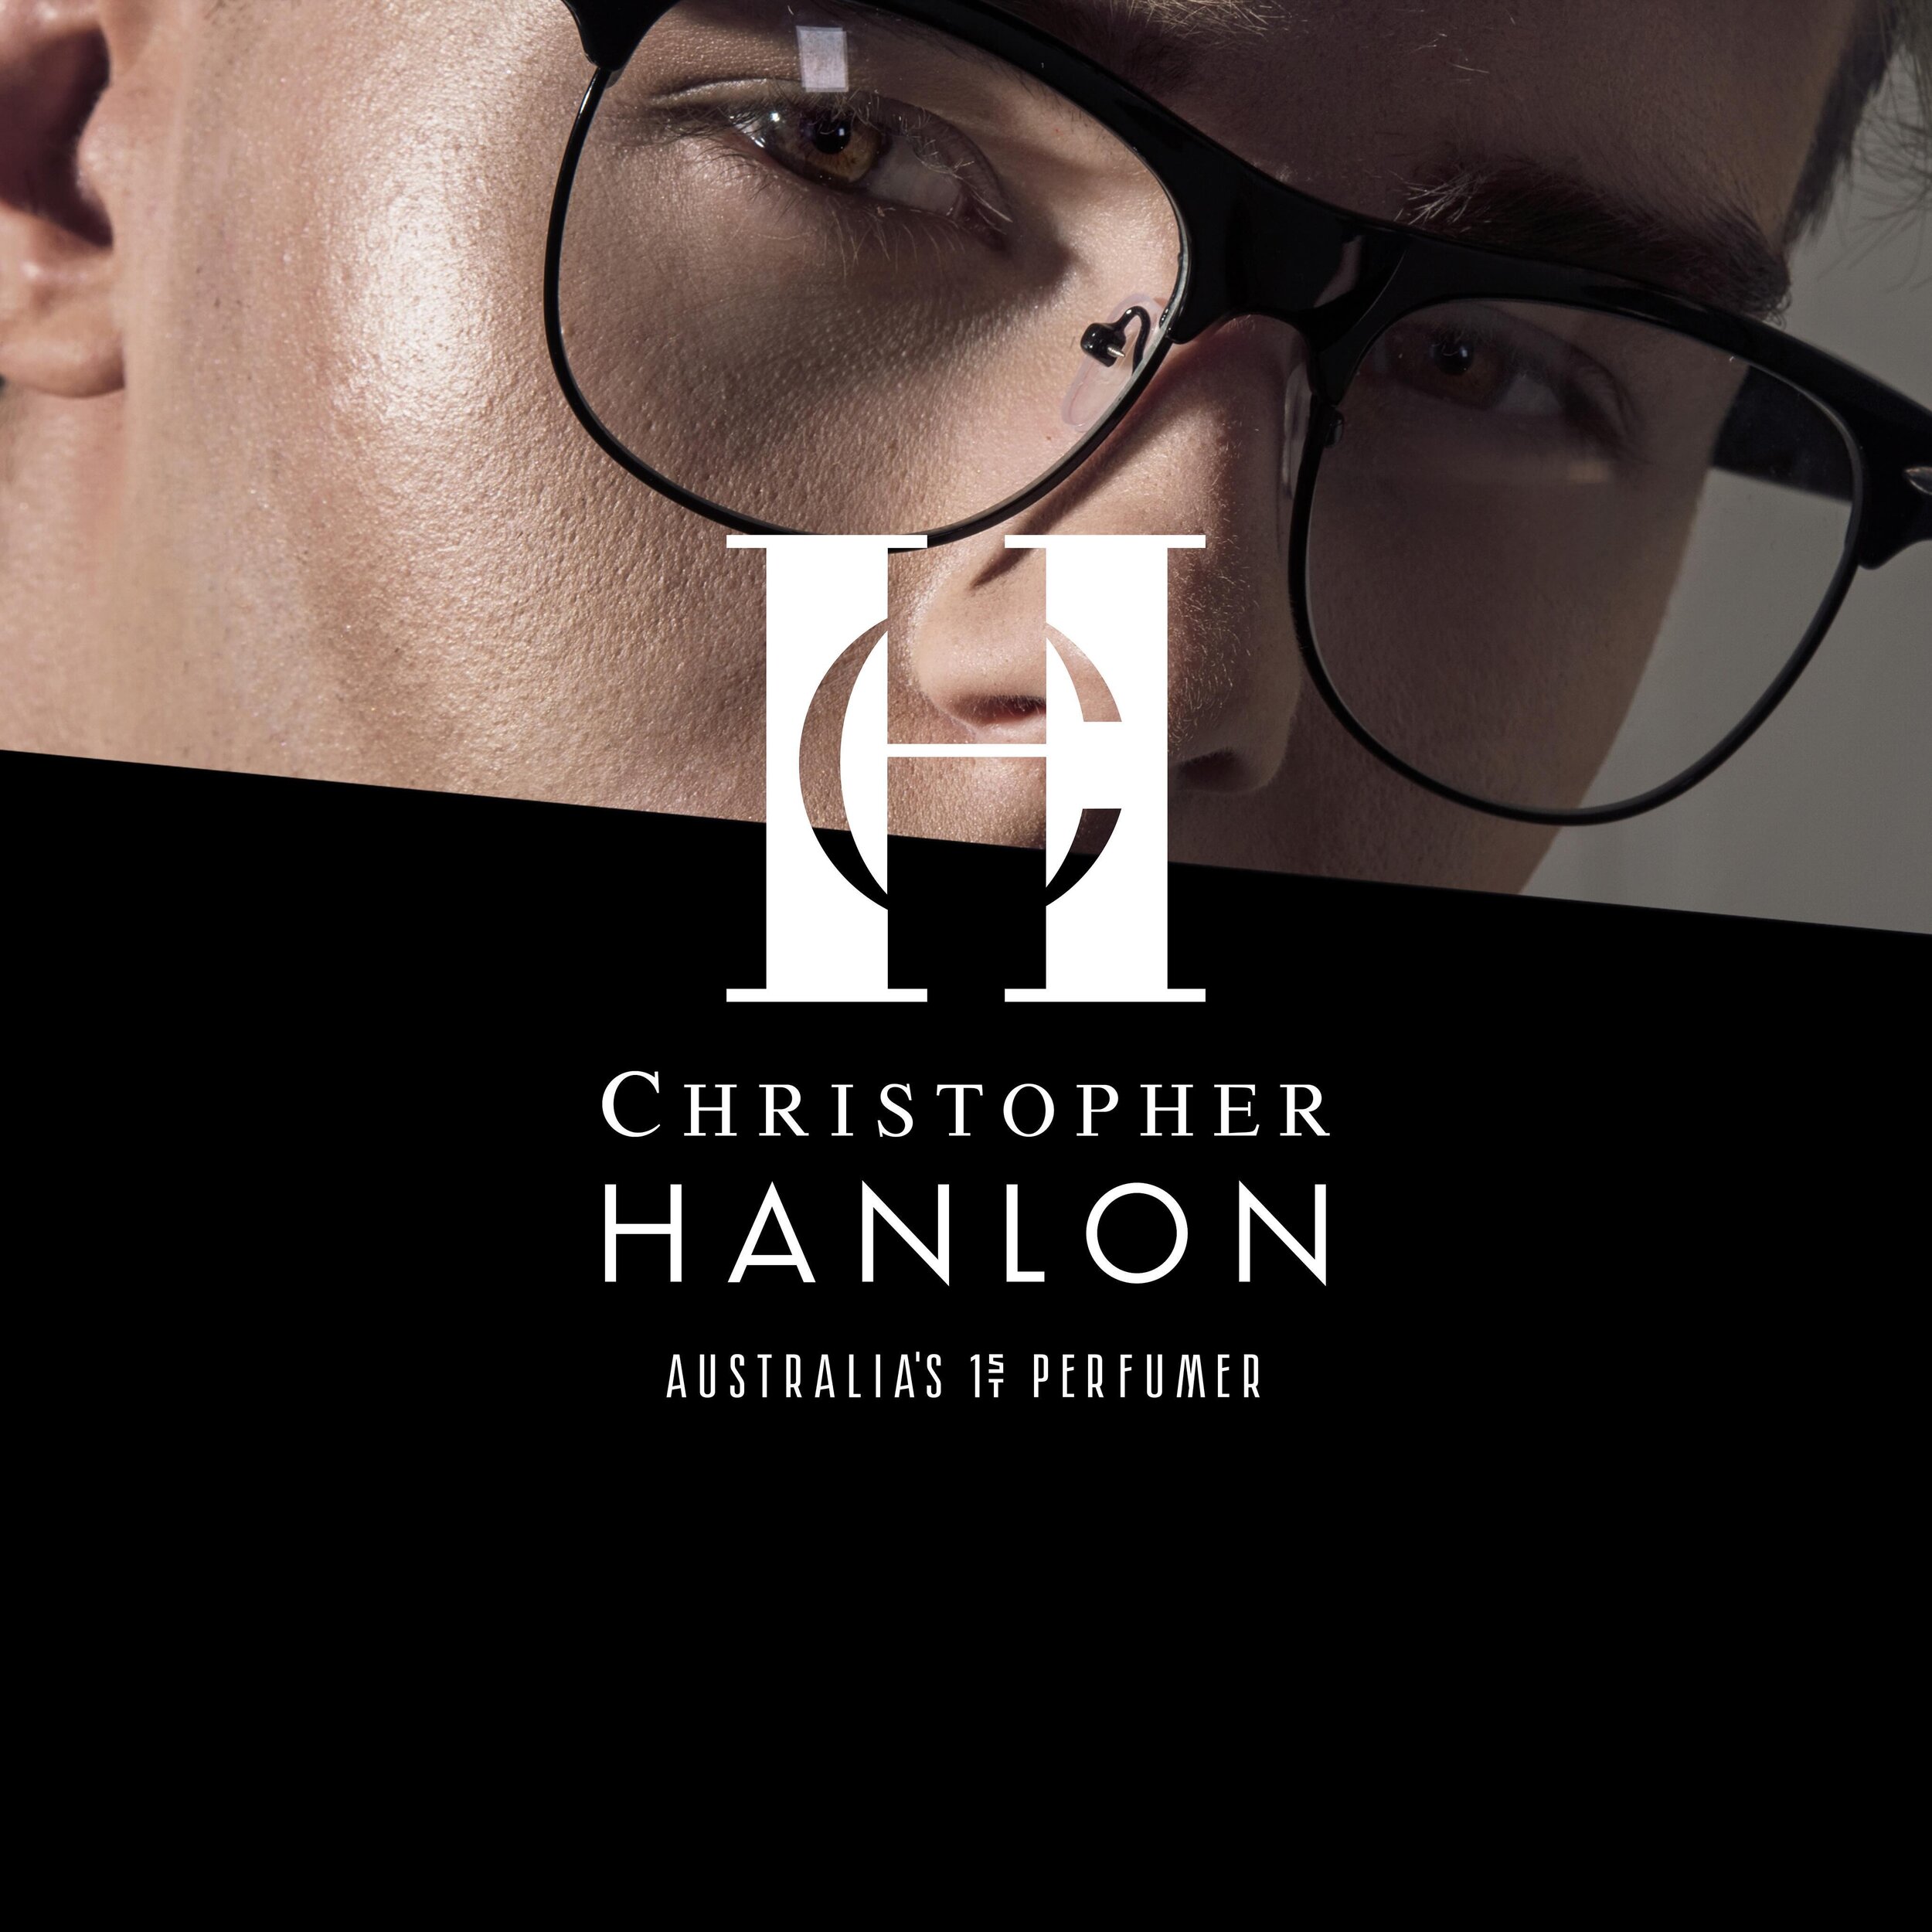 CH&reg; LOVES U 2
By CHRISTOPHER HANLON&reg;
Try $225+ of Perfume for $55. FREE - Redeemable.
https://christopherhanlon.com/free-perfume
Est1875